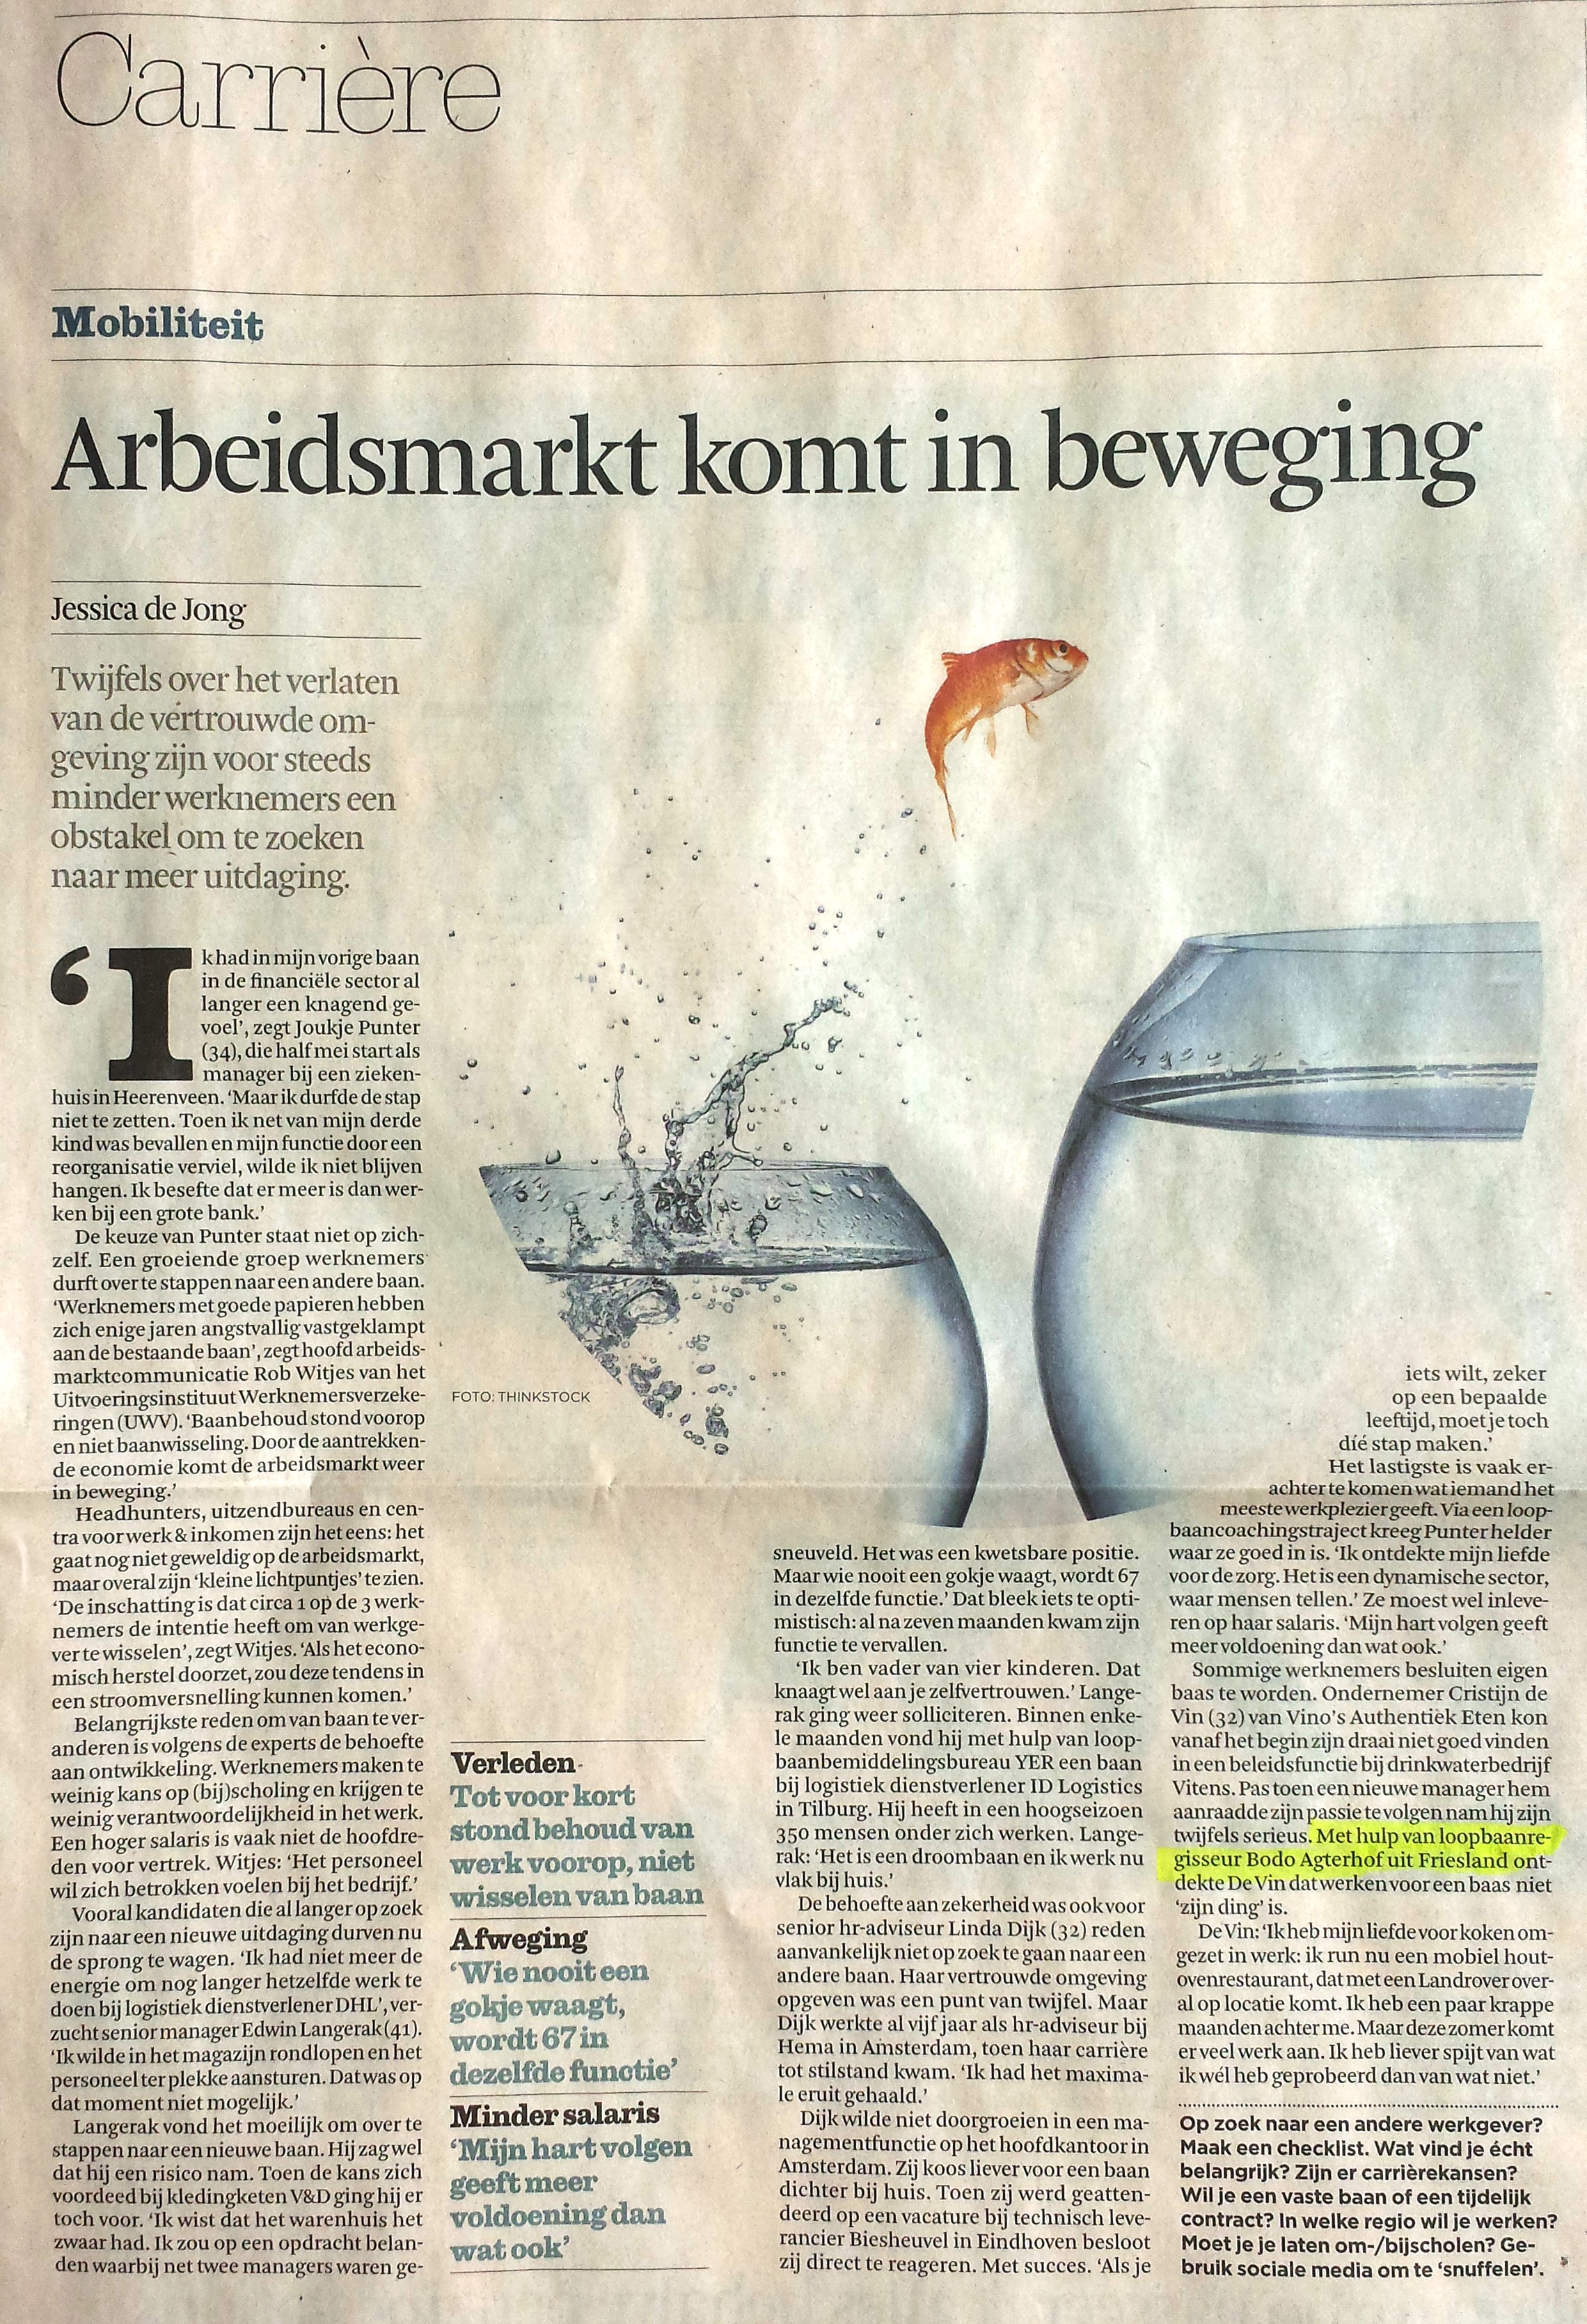 Arbeidsmarkt komt in Beweging: LoopbaanRegisseur in Financieel Dagblad